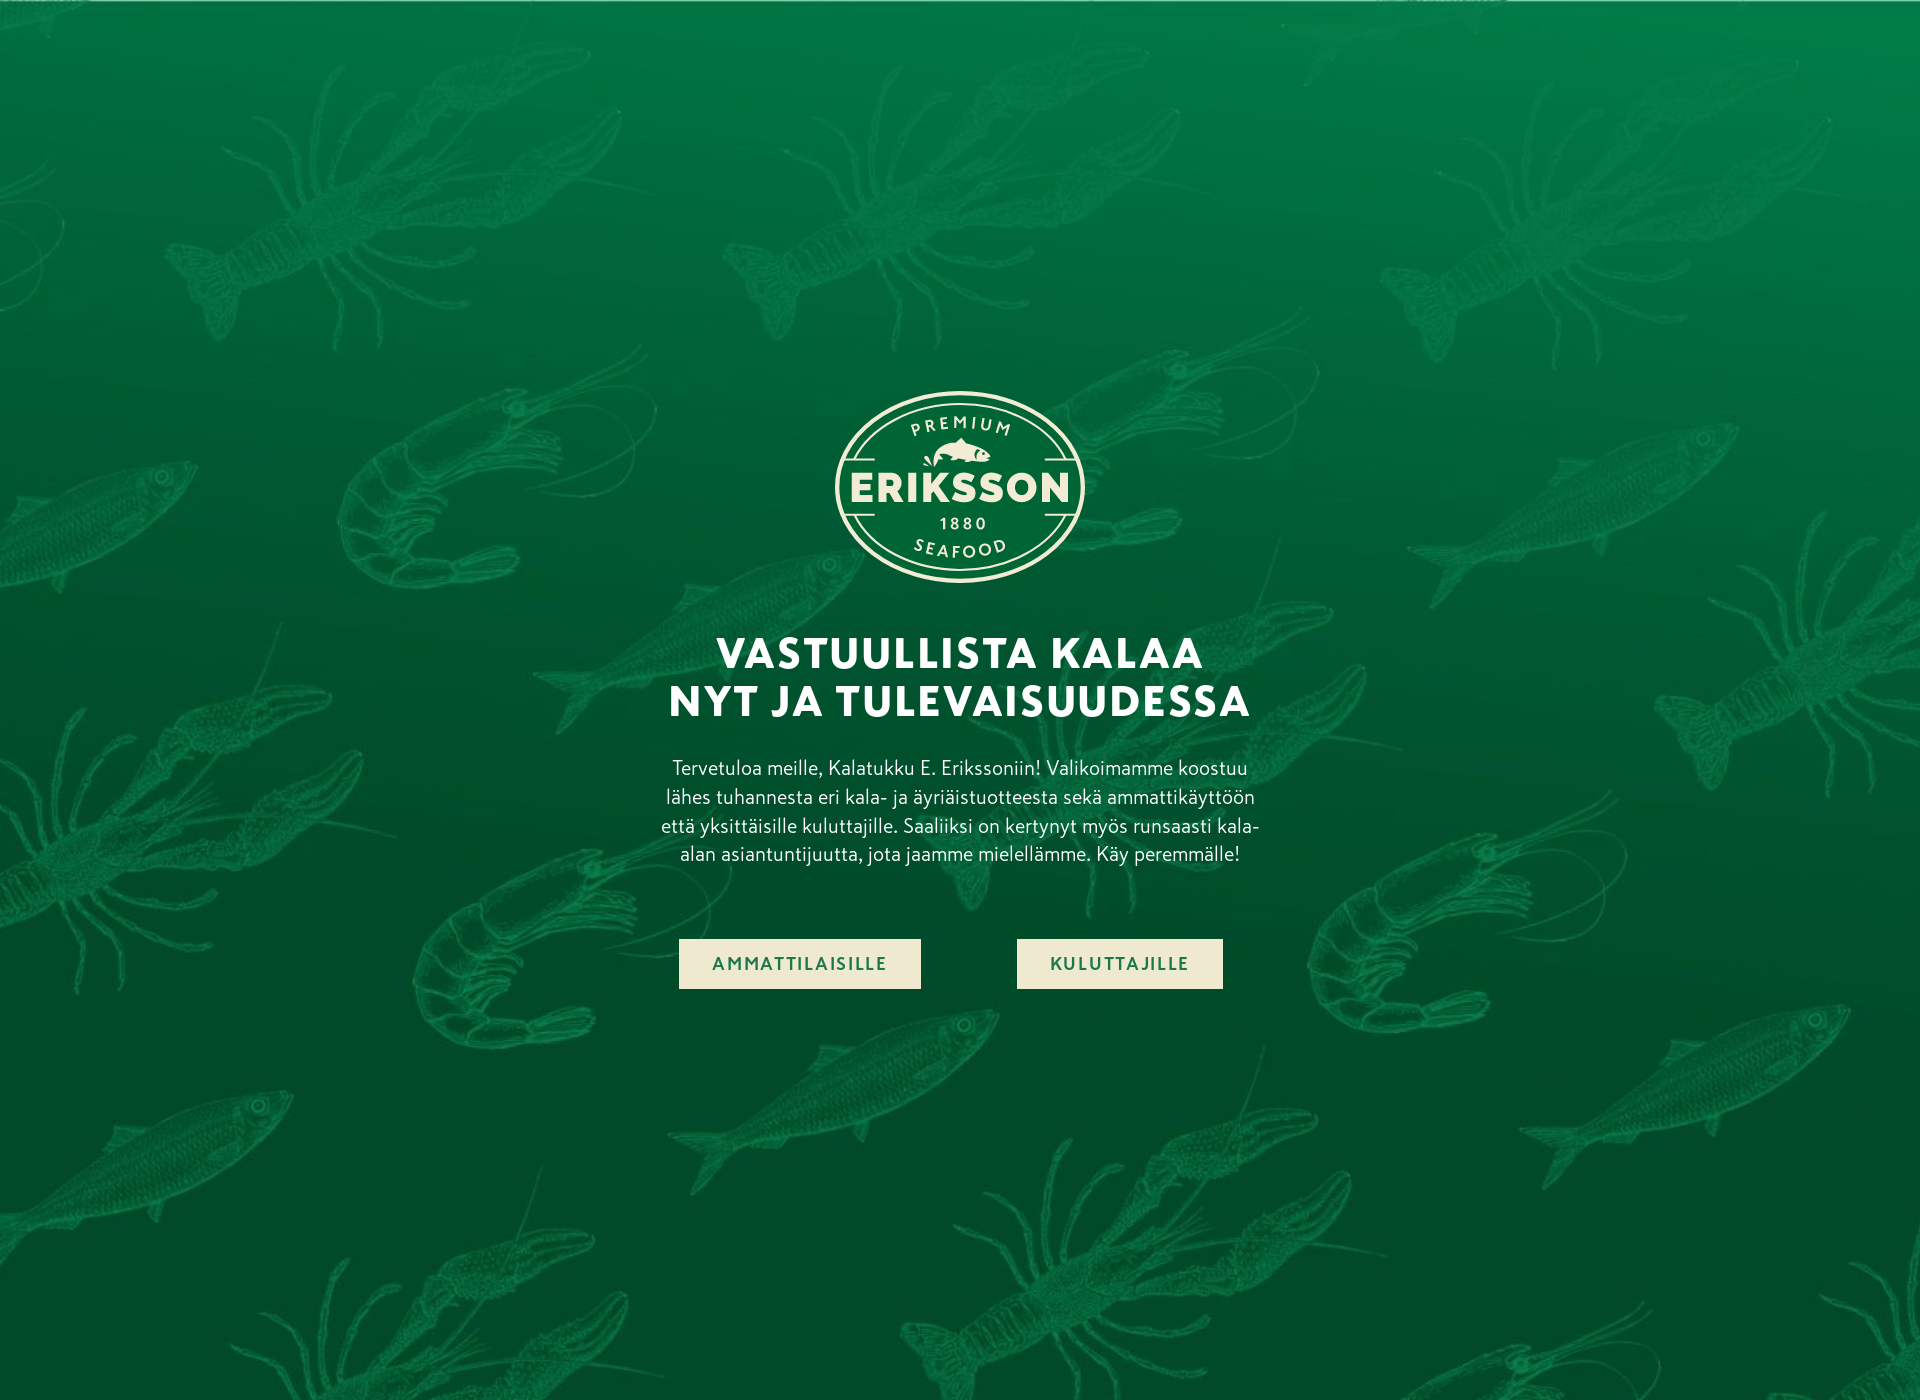 Skärmdump för kalatukkueriksson.fi